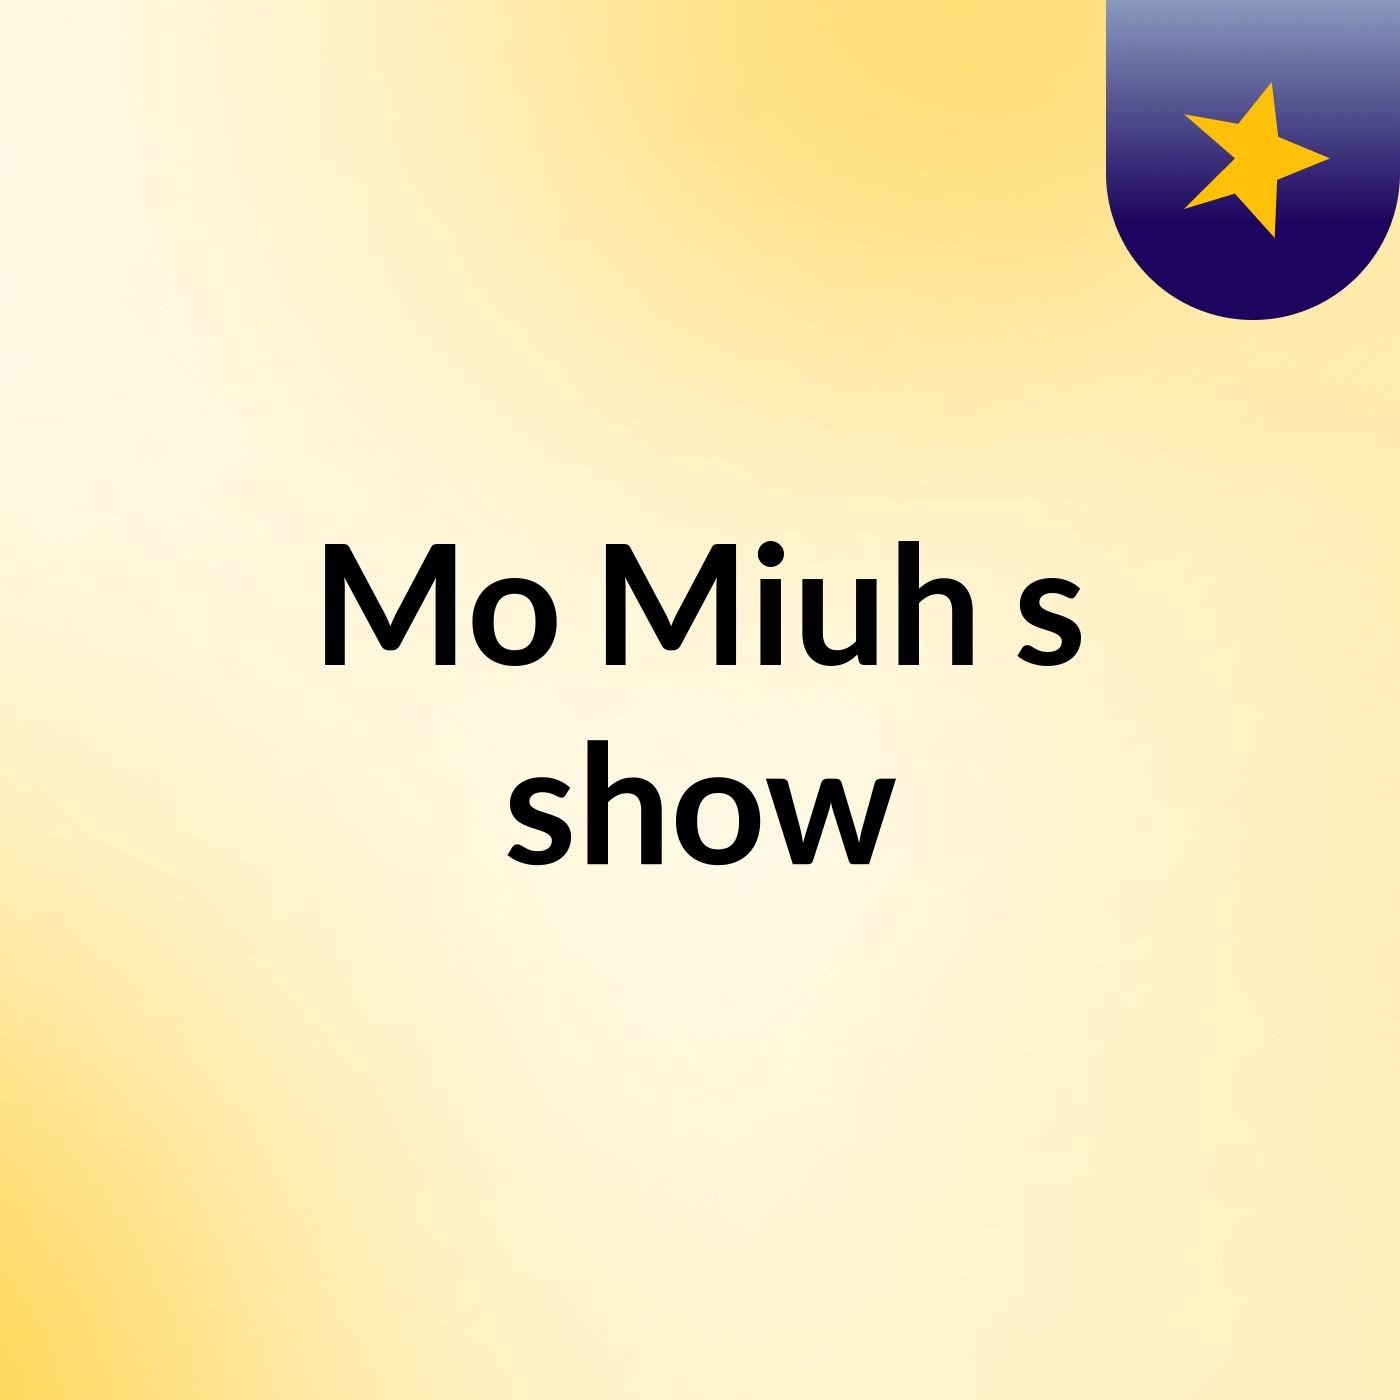 Mo Miuh's show